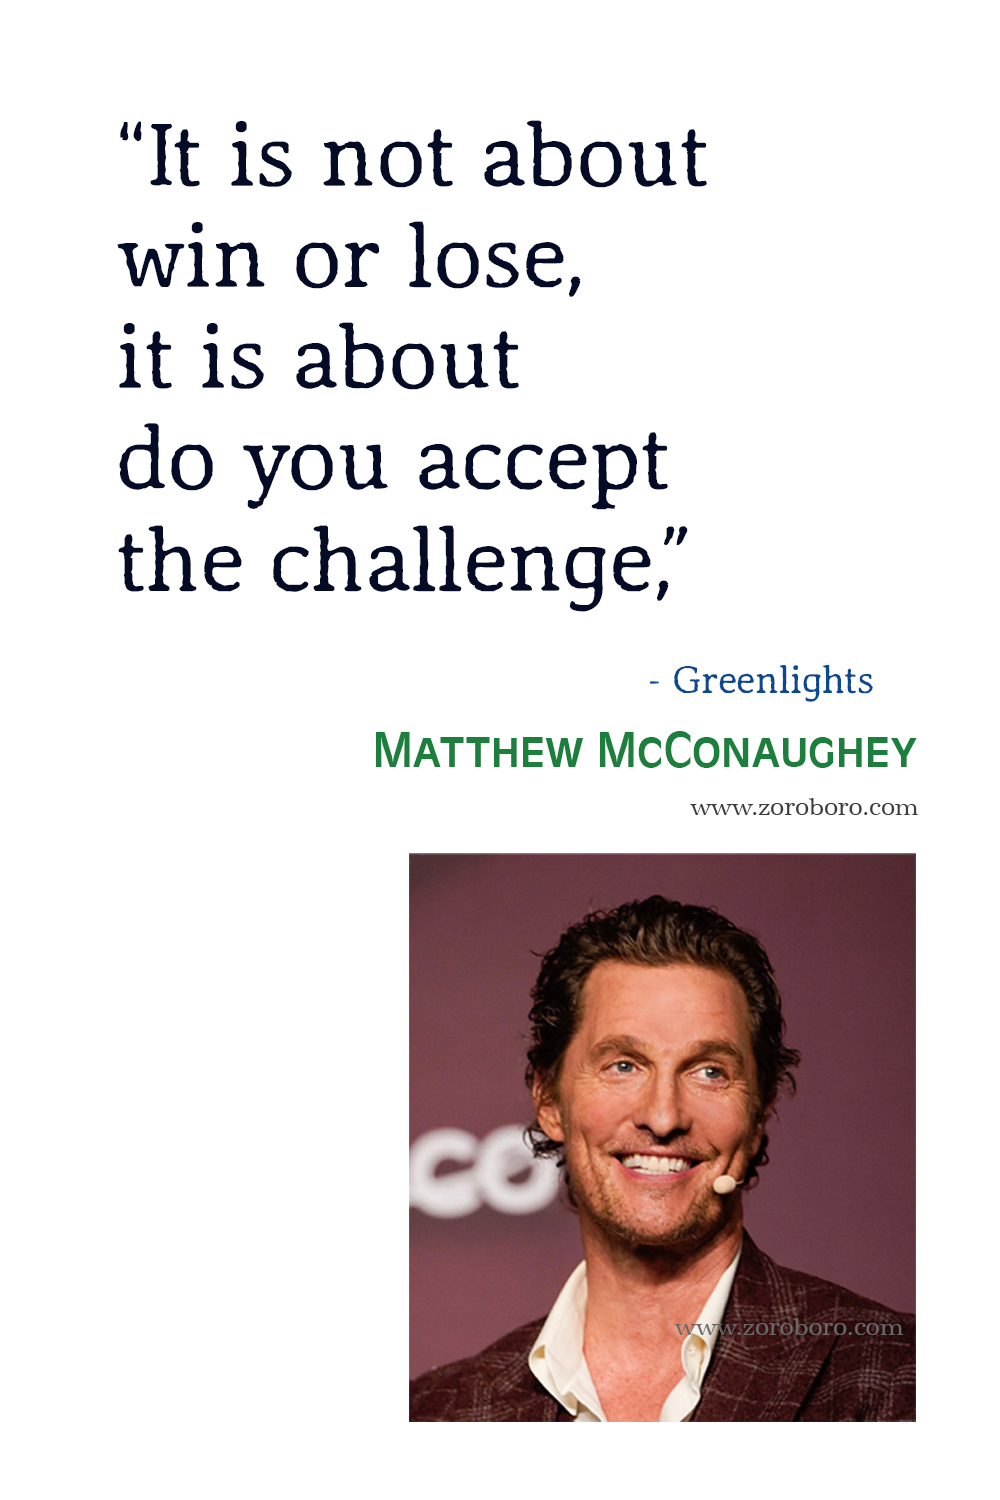 Matthew McConaughey Quotes, Matthew McConaughey Greenlights Quotes, Matthew McConaughey Inspirational Quotes, Matthew McConaughey Book Quotes.